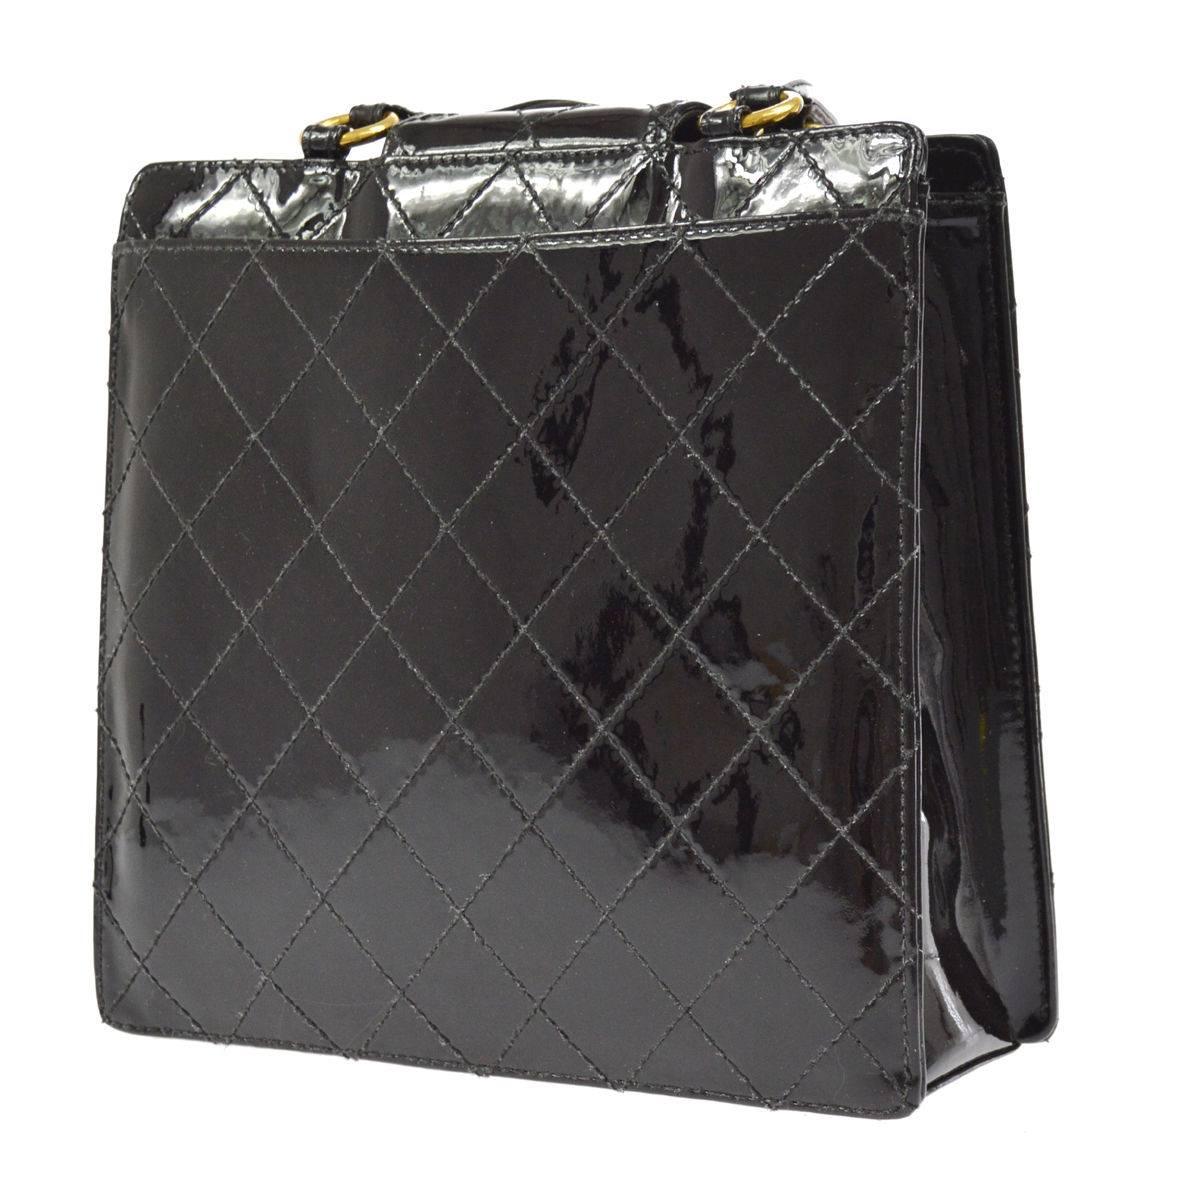 Chanel Vintage Black Patent Leather Top Handle Satchel Evening Bag 2